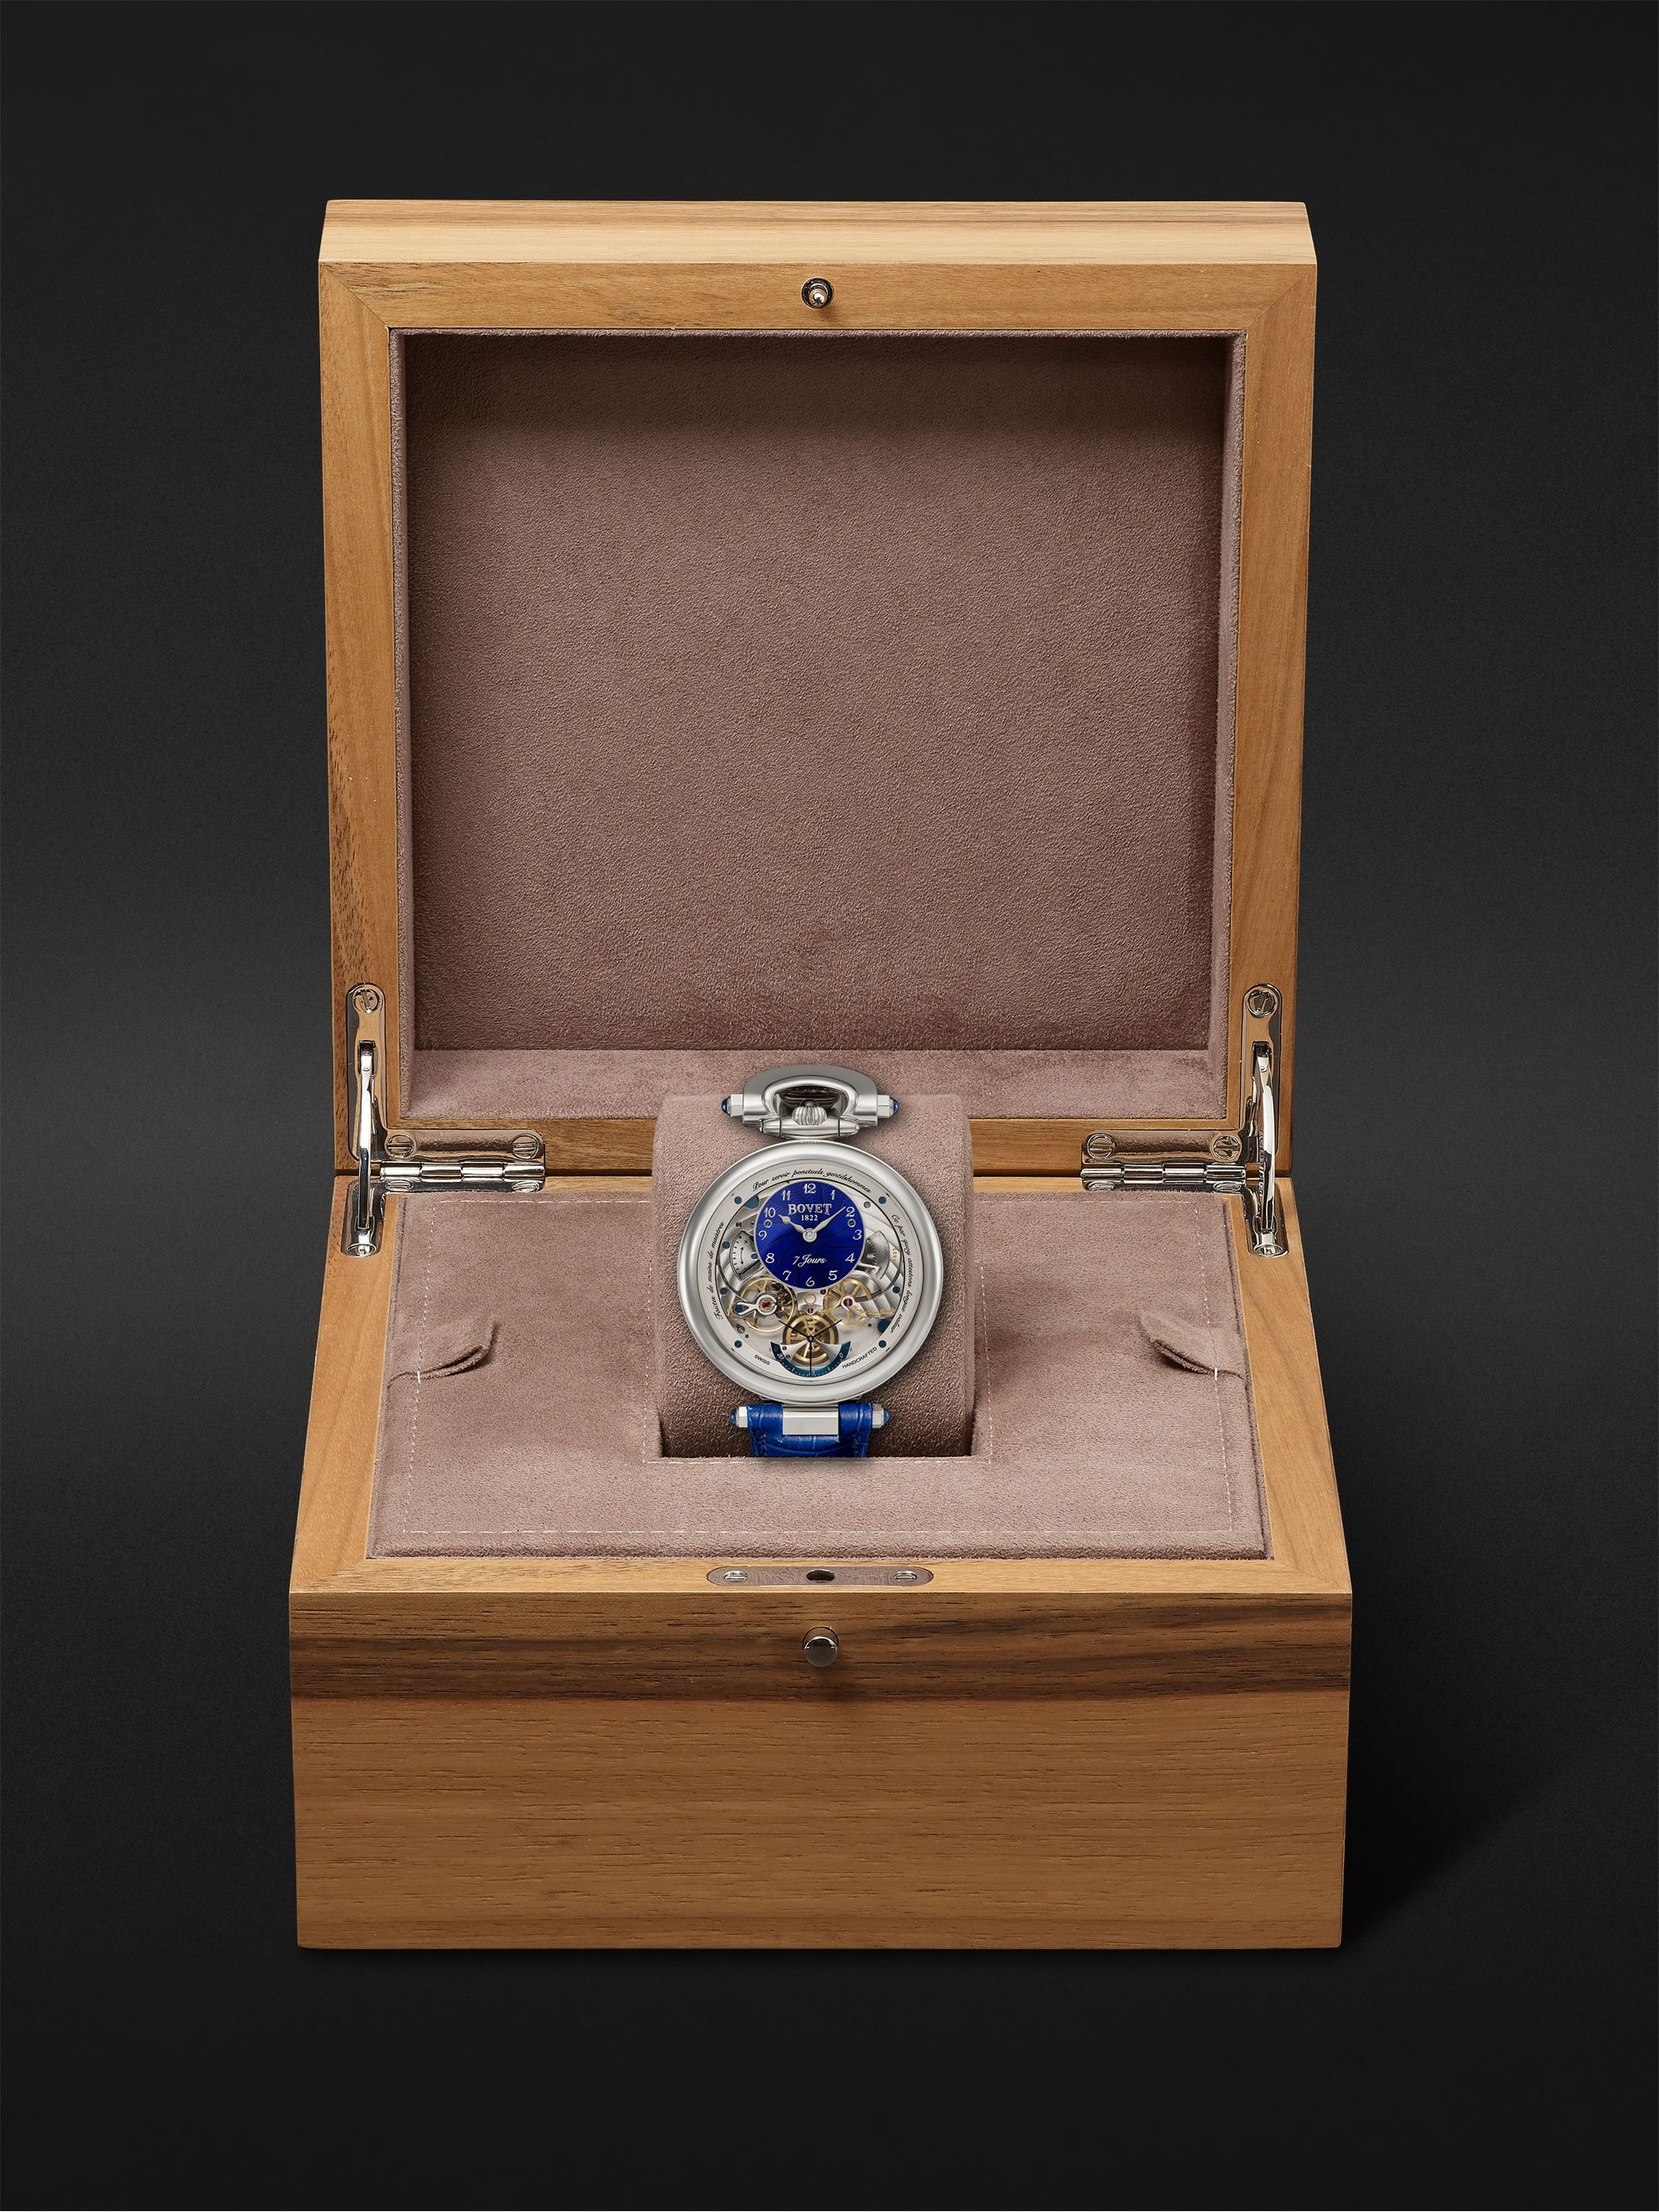 BOVET Monsieur BOVET Hand-Wound 43mm 18-Karat White Gold and Alligator-Effect Leather Watch, Ref. No. AI43018-G46